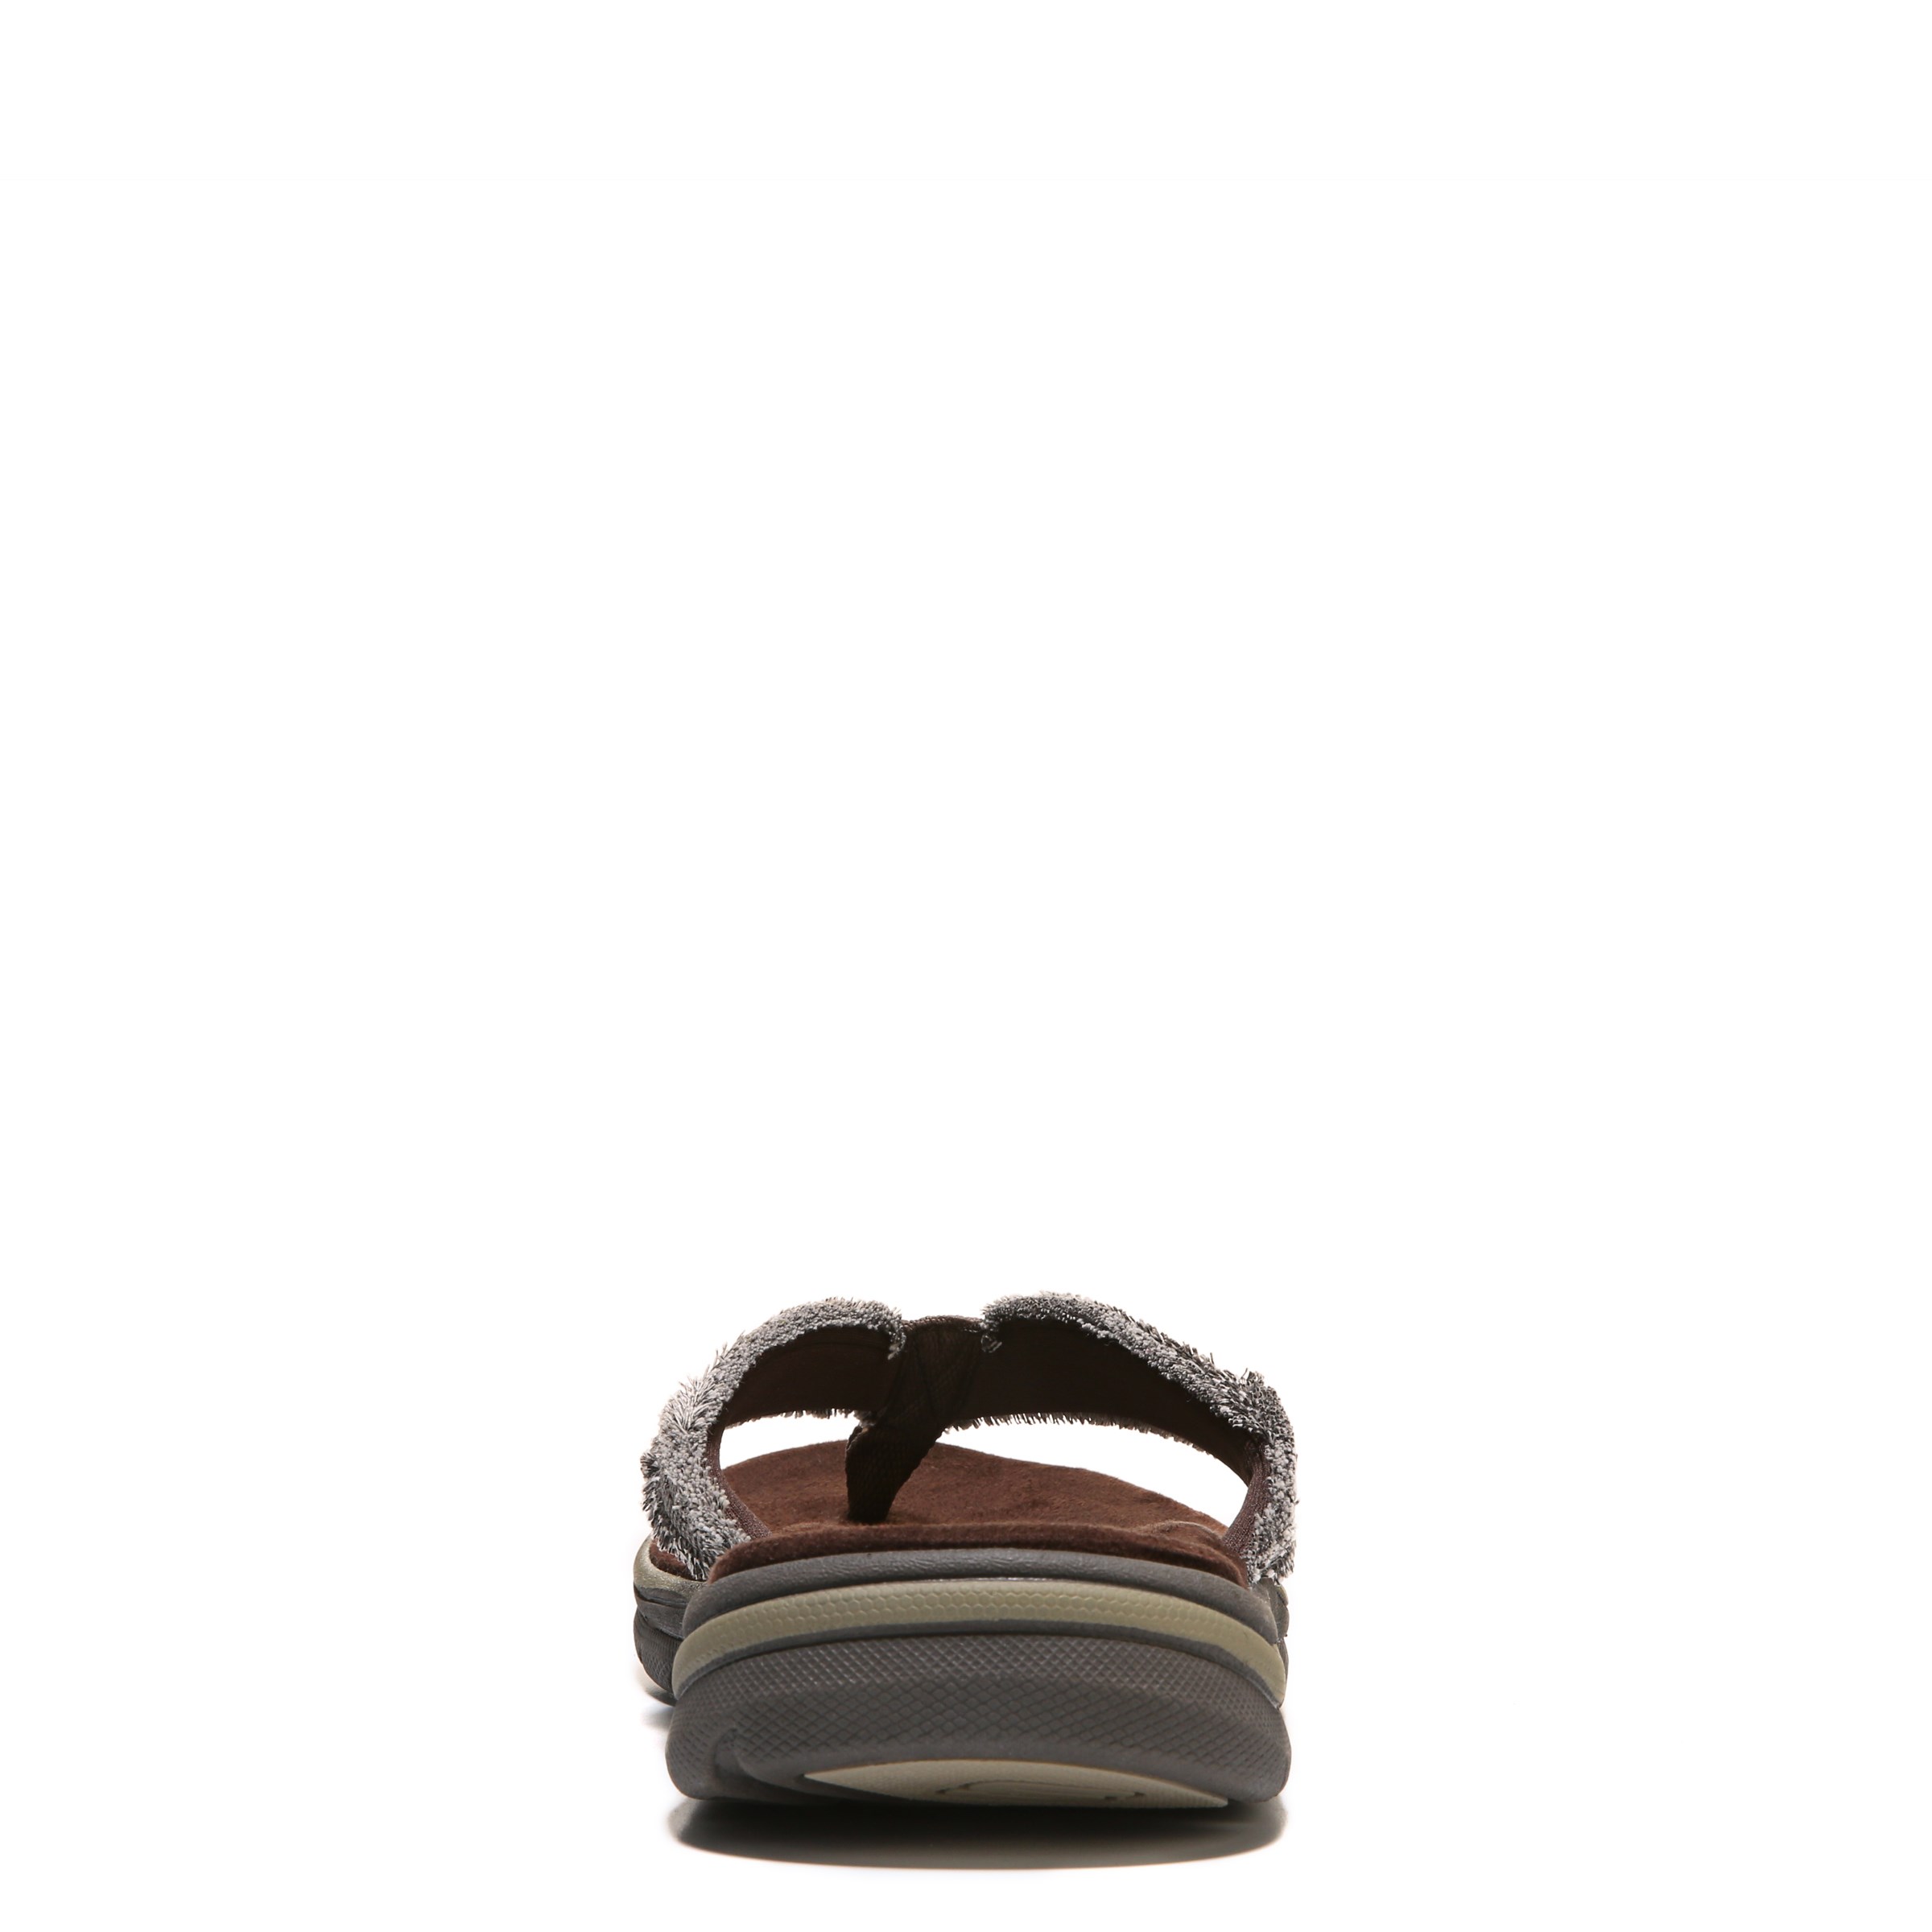 Skechers Men's Supreme Bosnia Chocolate Brown Sandals - Size 11 NWB